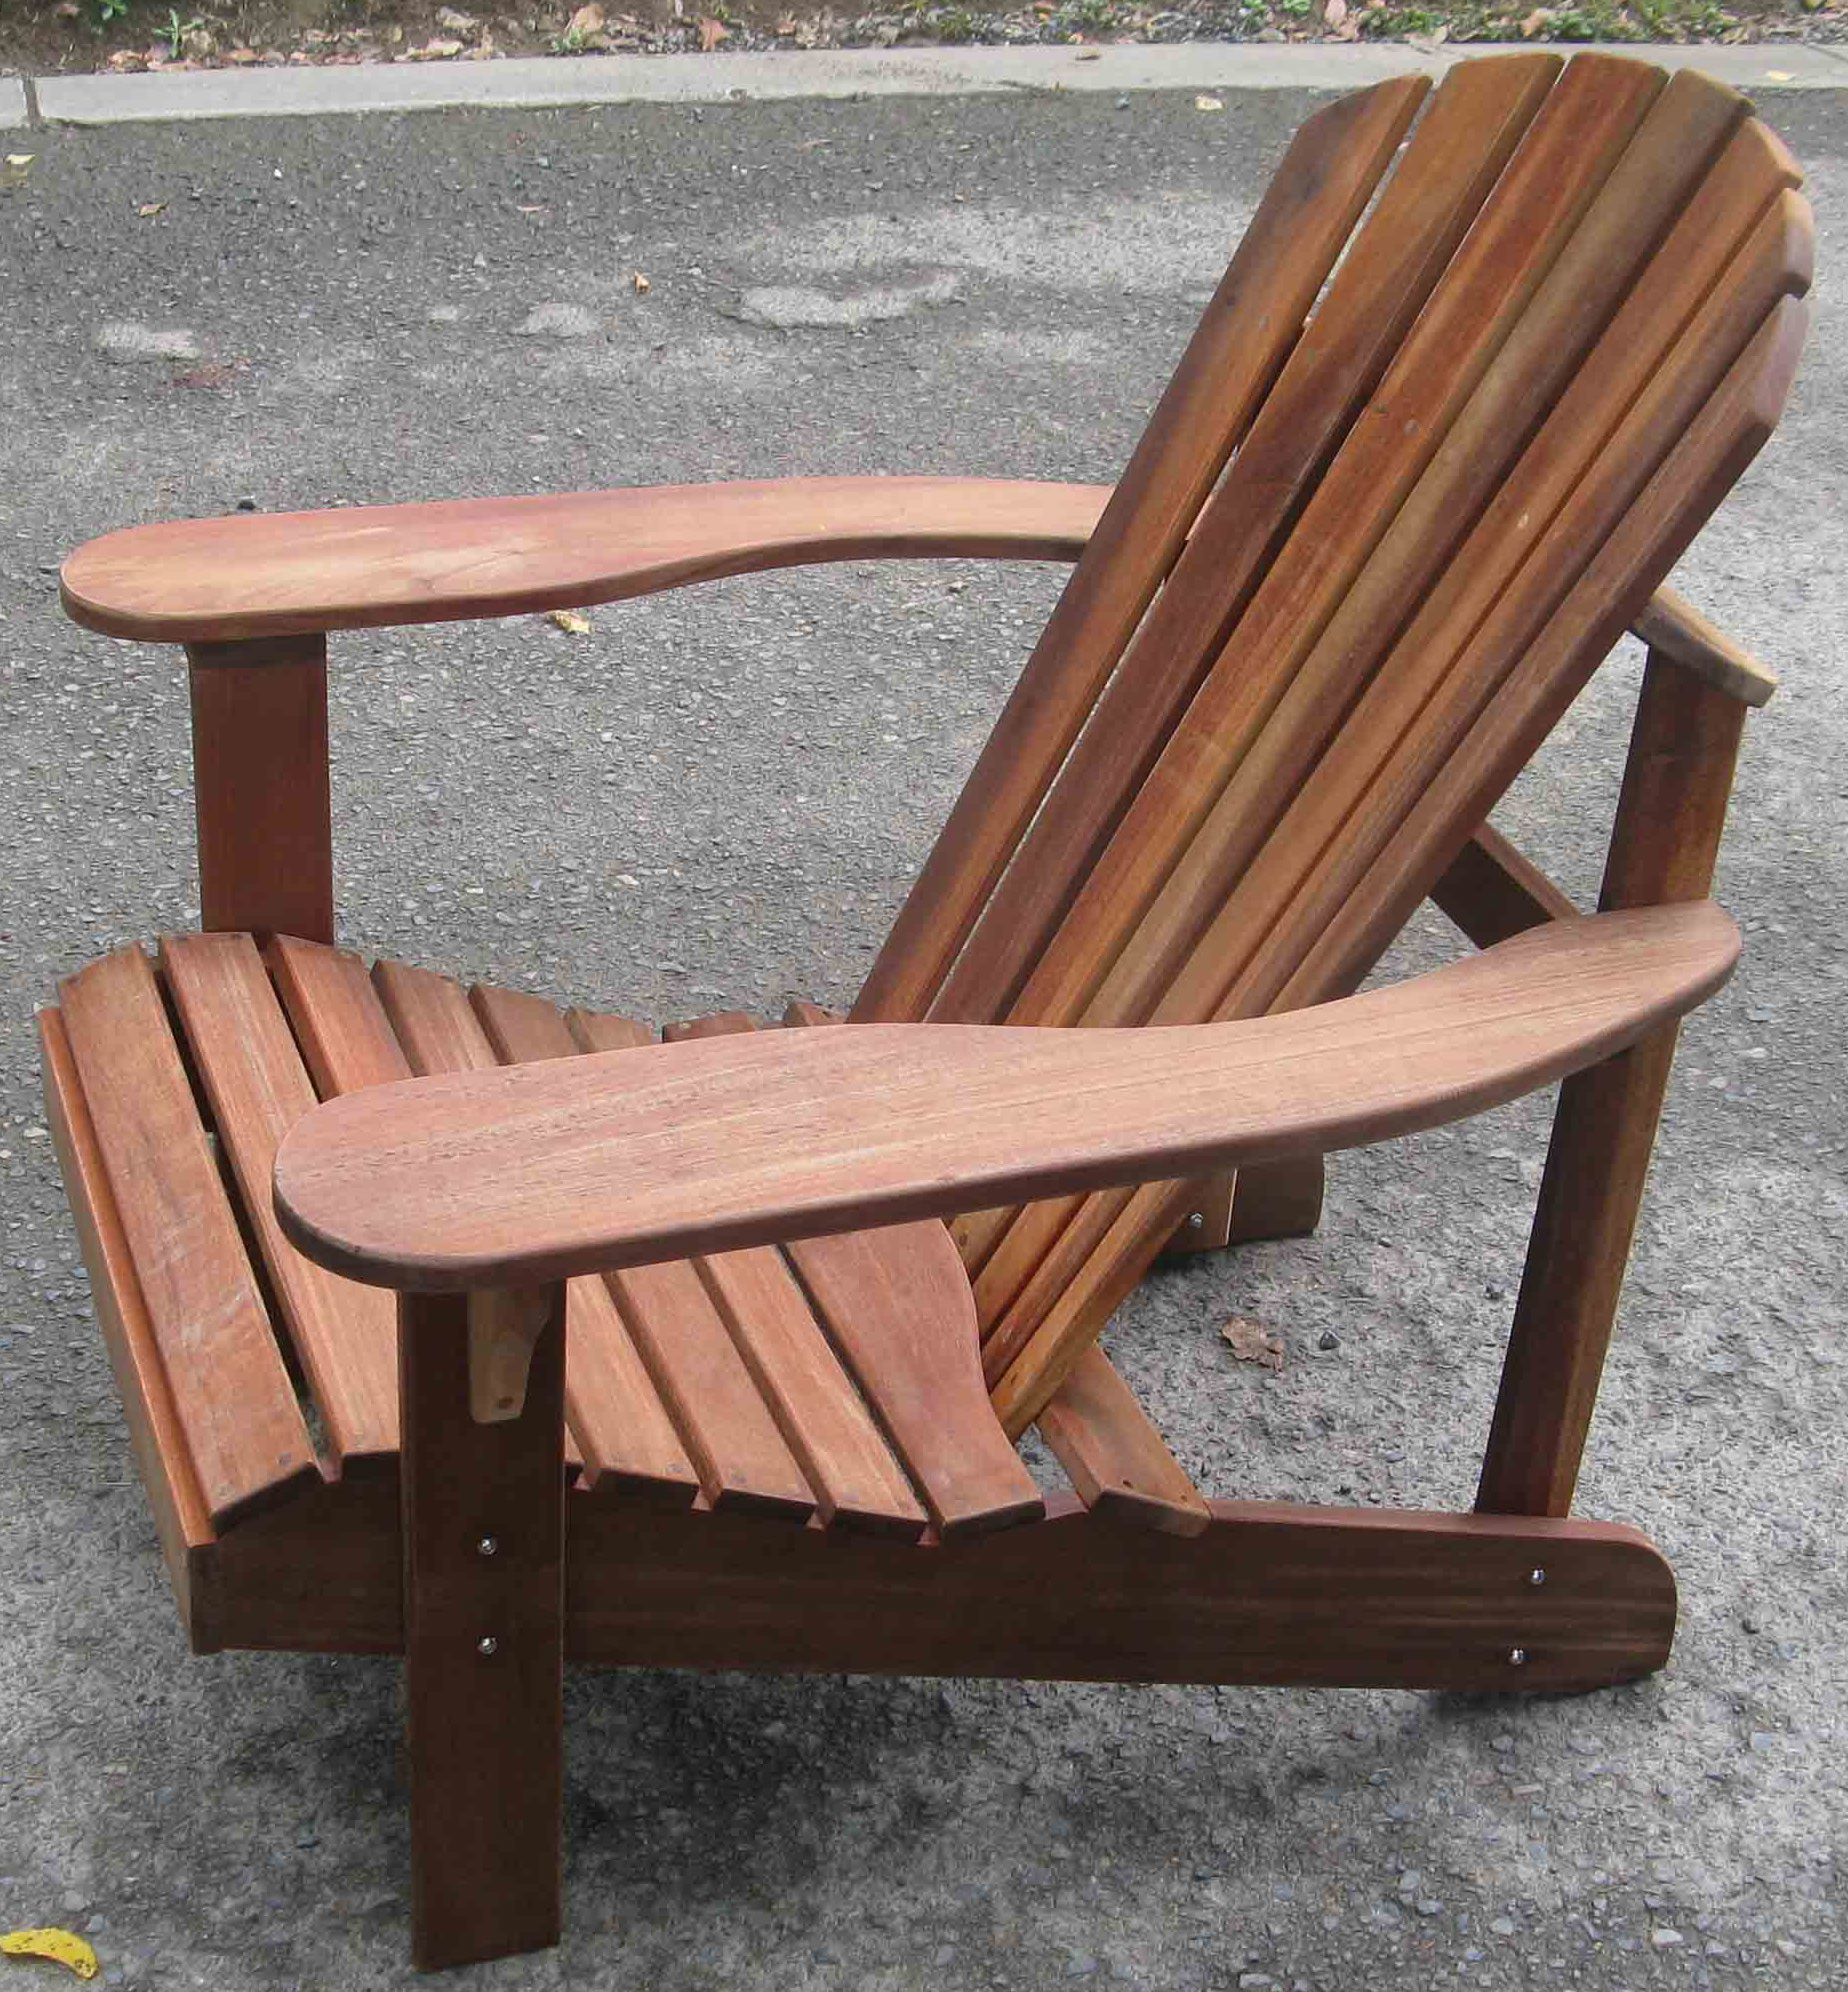 NEW Brown Hardwood Adirondack Chair eBay